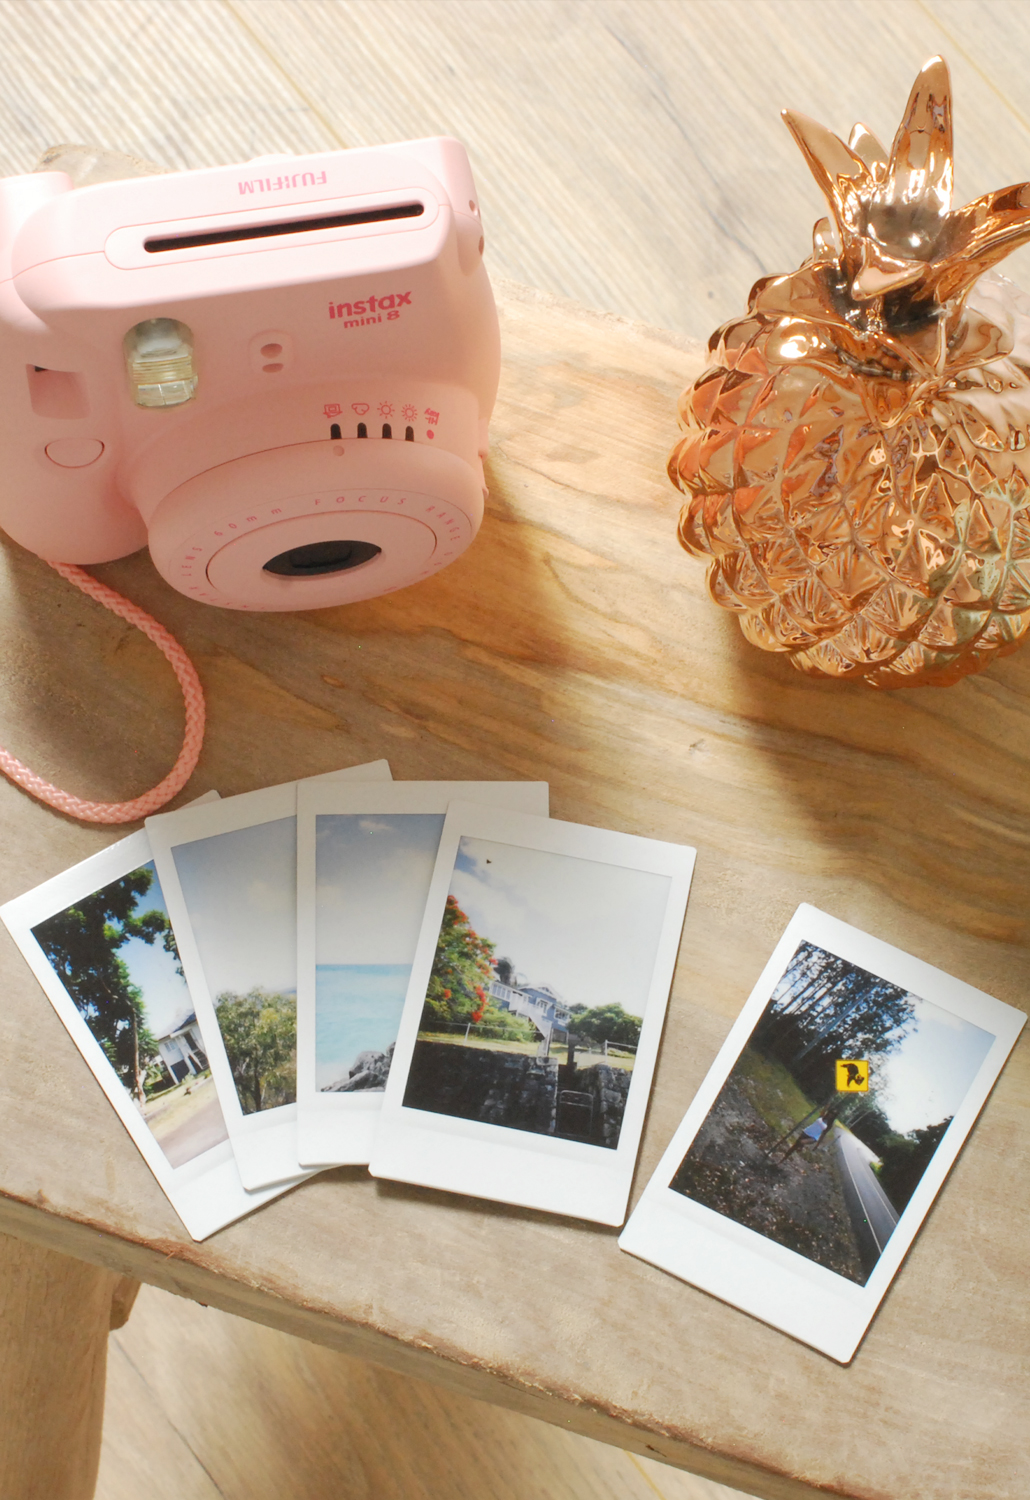 FujiFilm instax mini 8 instant camera pink lifestyle by linda